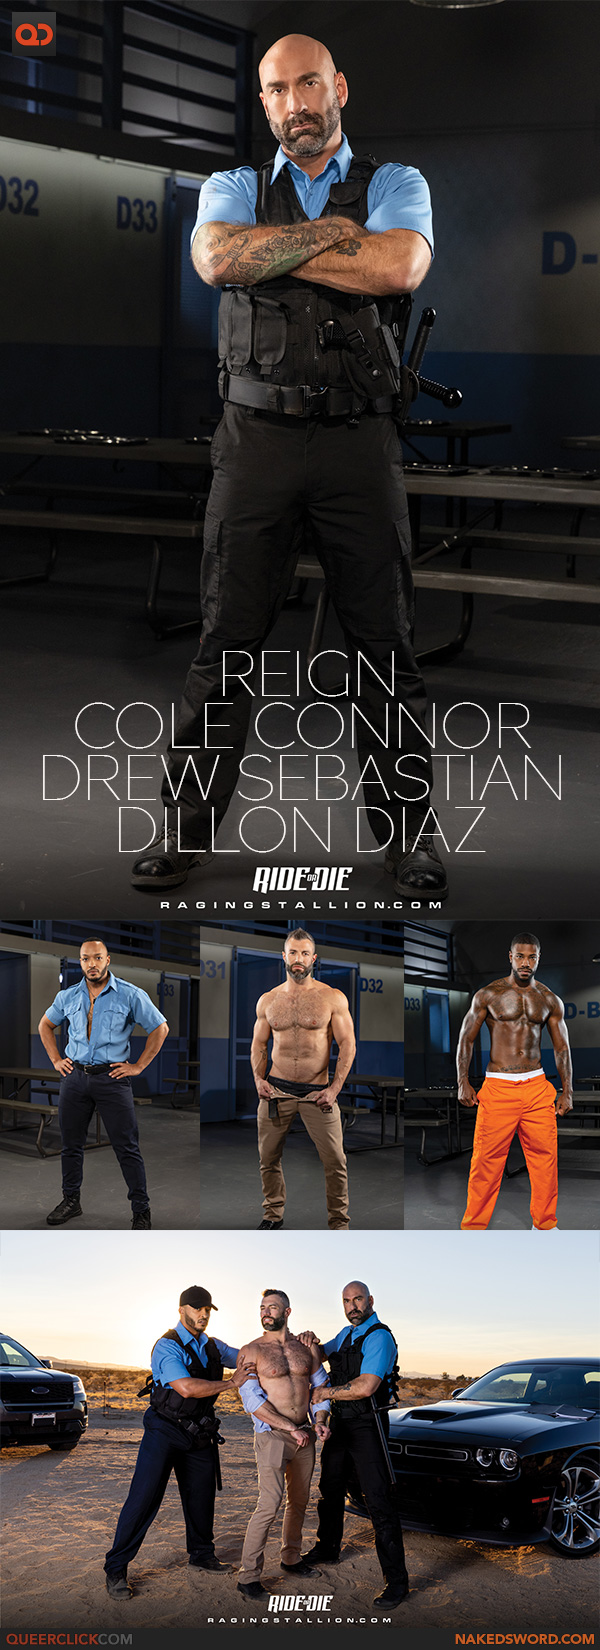 Naked Sword: Reign, Cole Connor, Drew Sebastian and Dillon Diaz